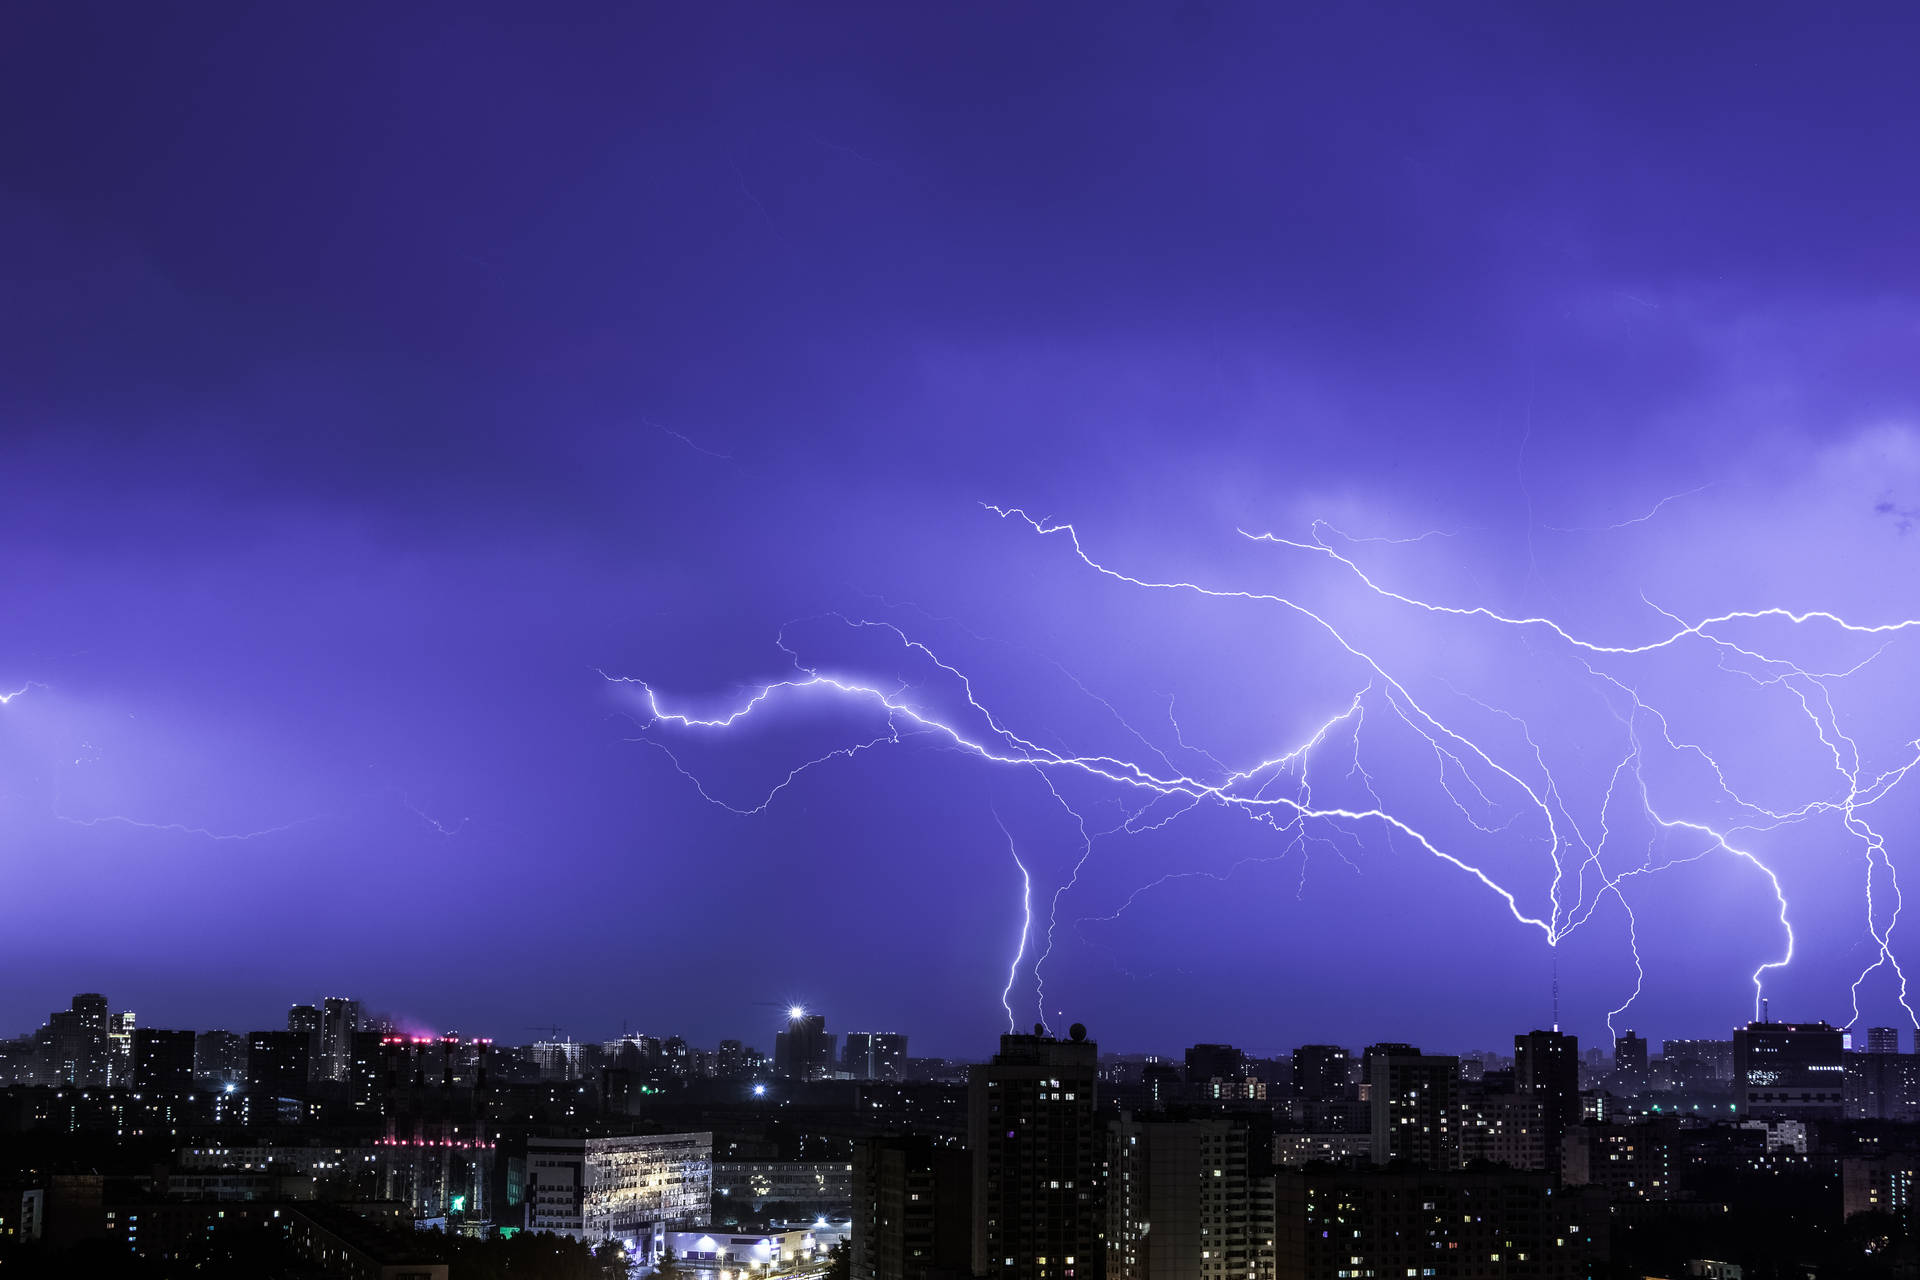 A powerful lightning strike illuminates the night sky of a big city Wallpaper